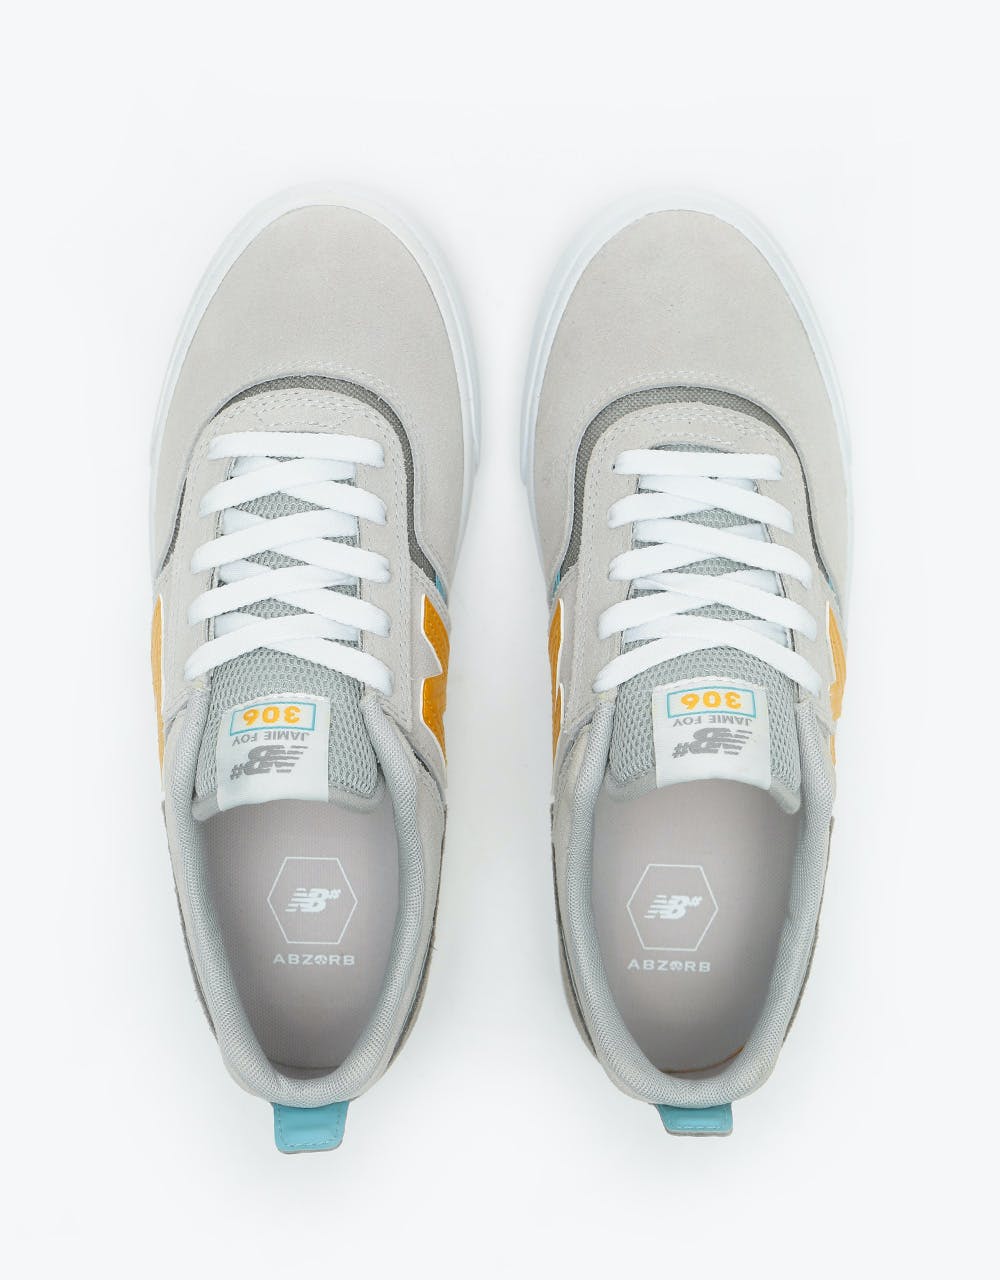 New Balance Numeric 306 Skate Shoes - Grey/Yellow